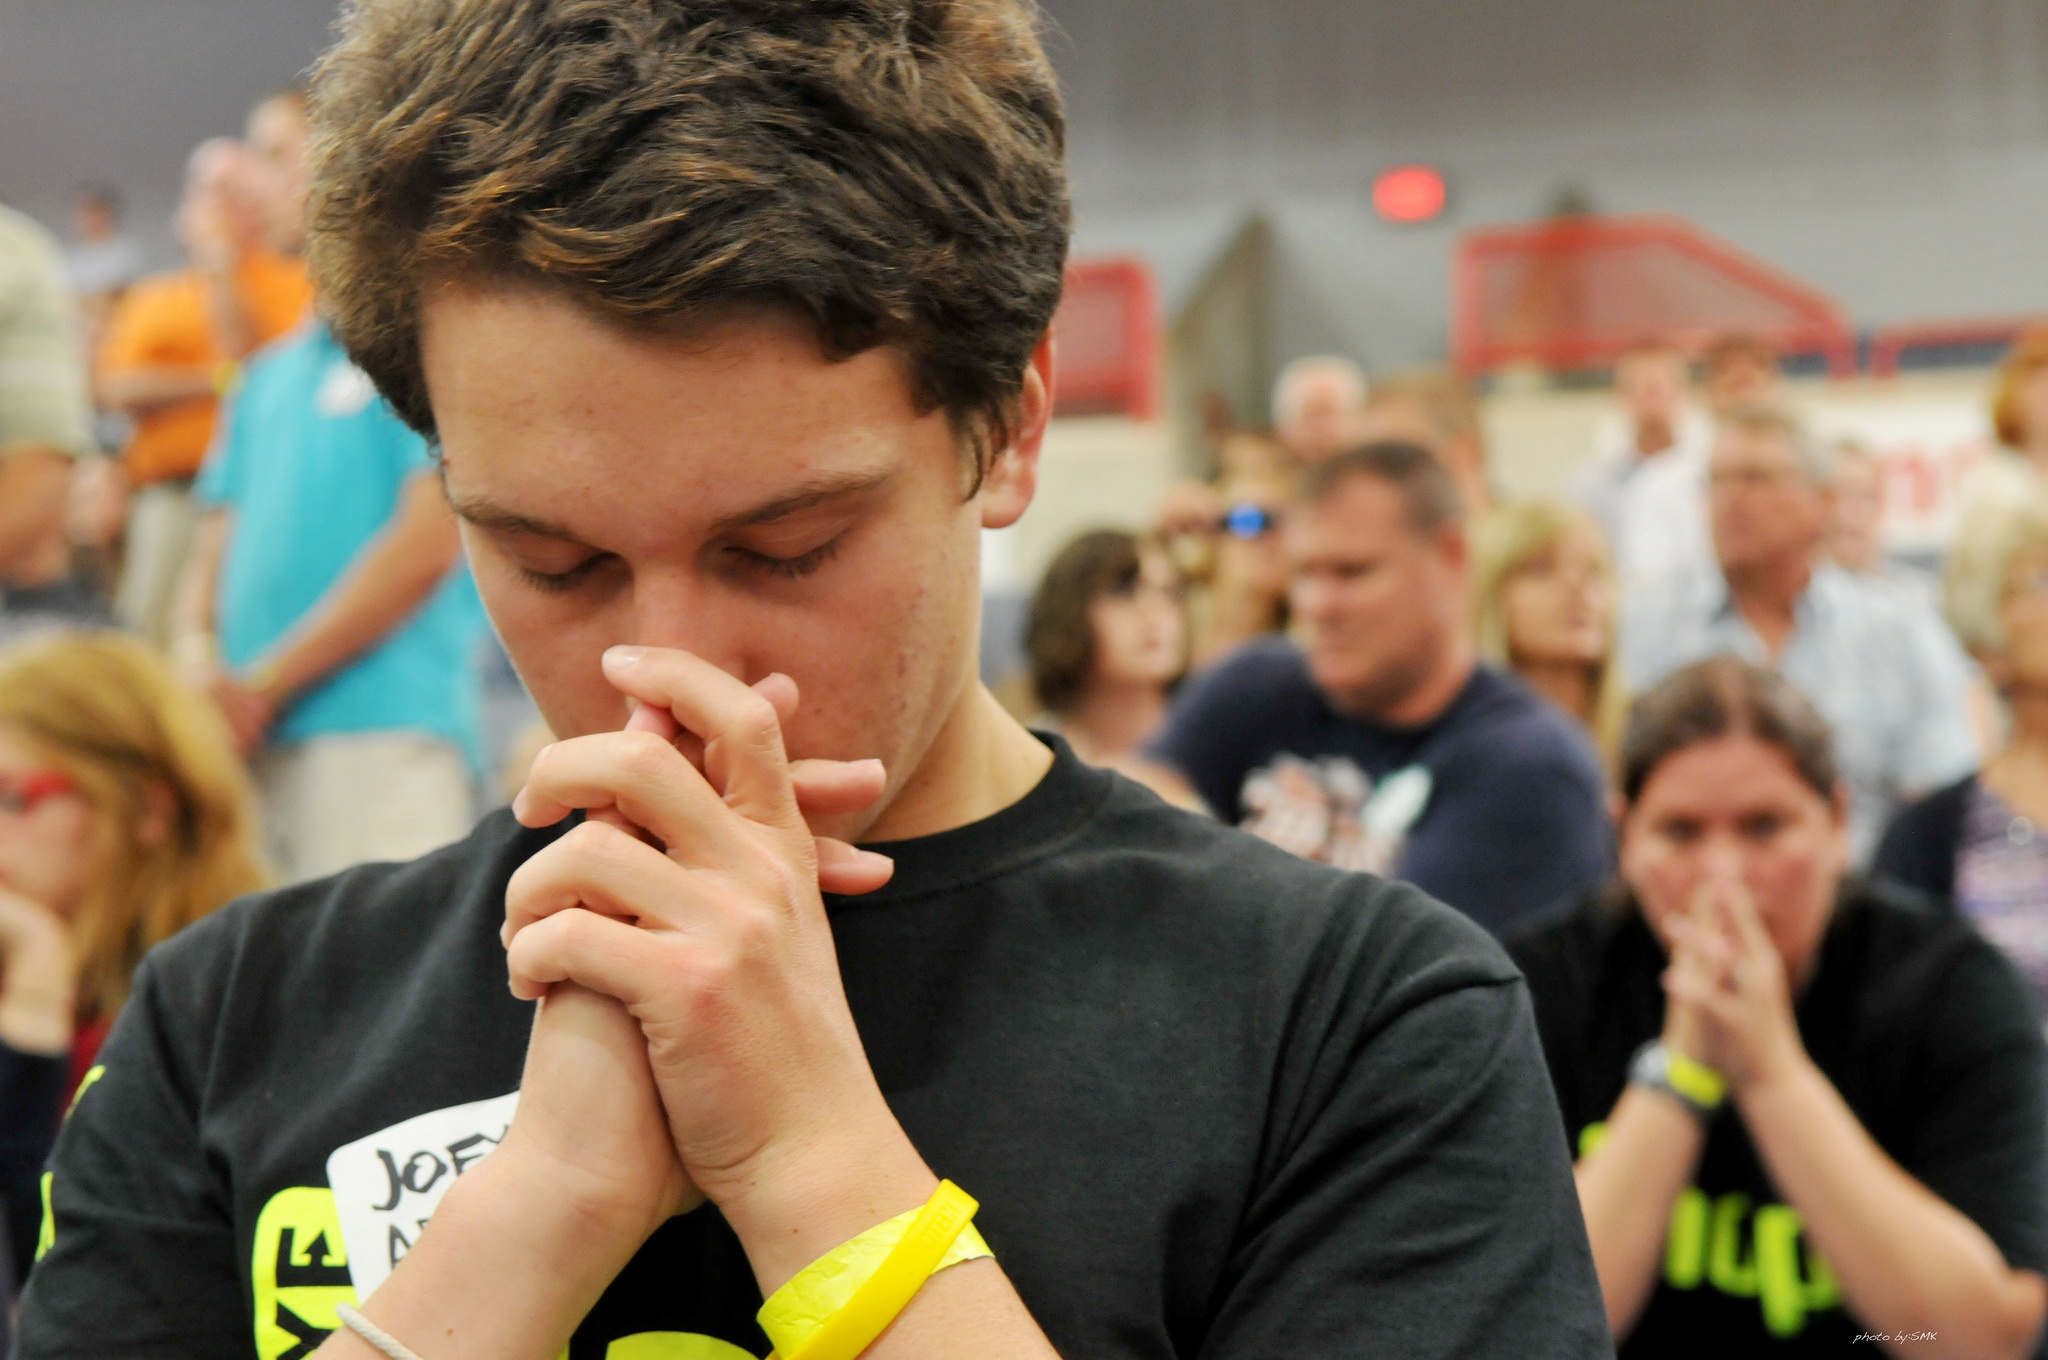 Man praying in a crowd of people